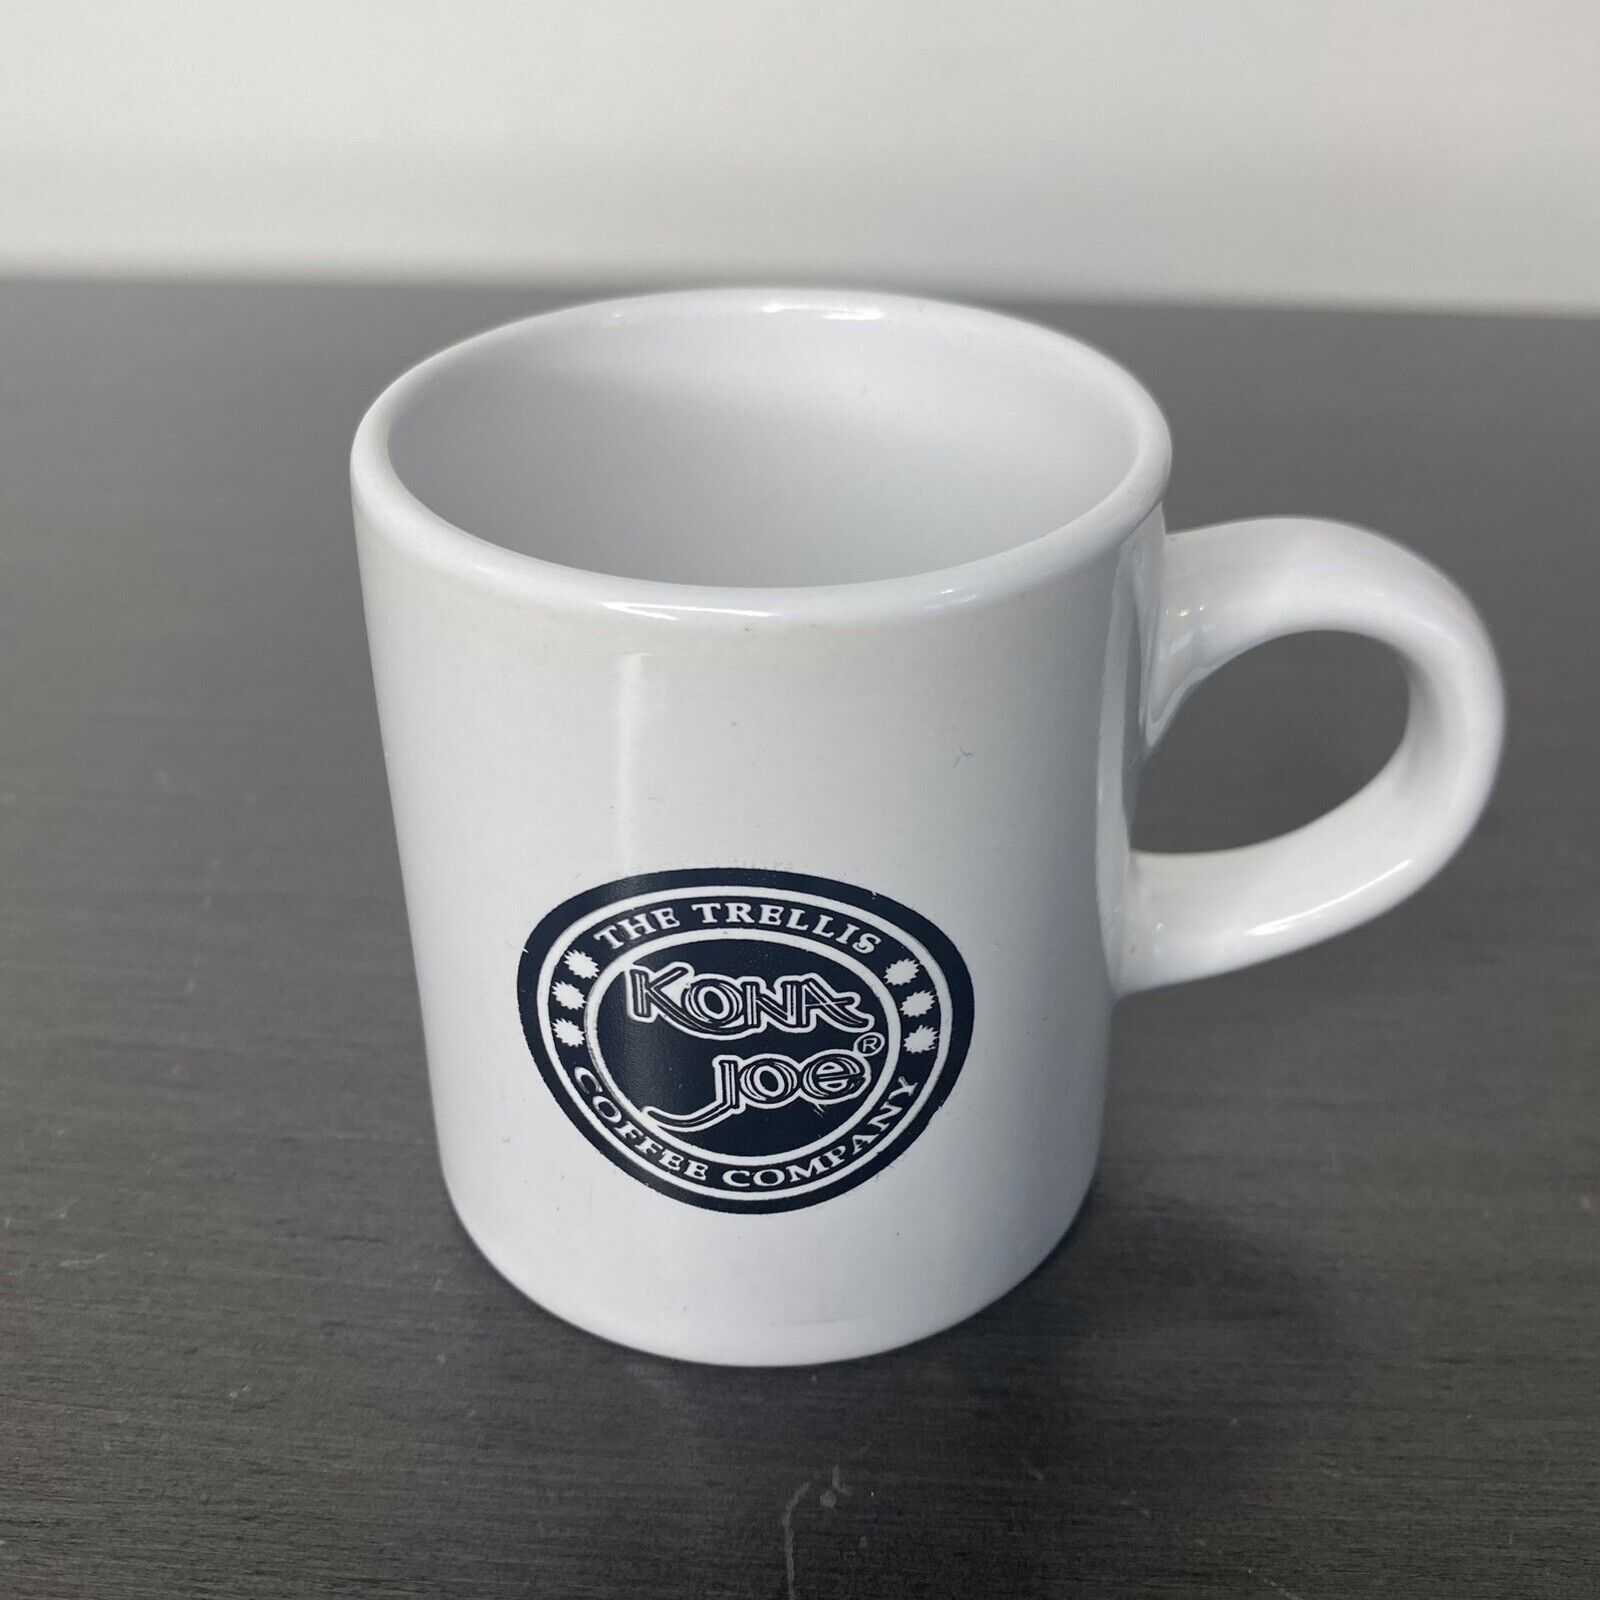 Kona Joe The Trellis Coffee Company Demitasse Espresso Cup Mug